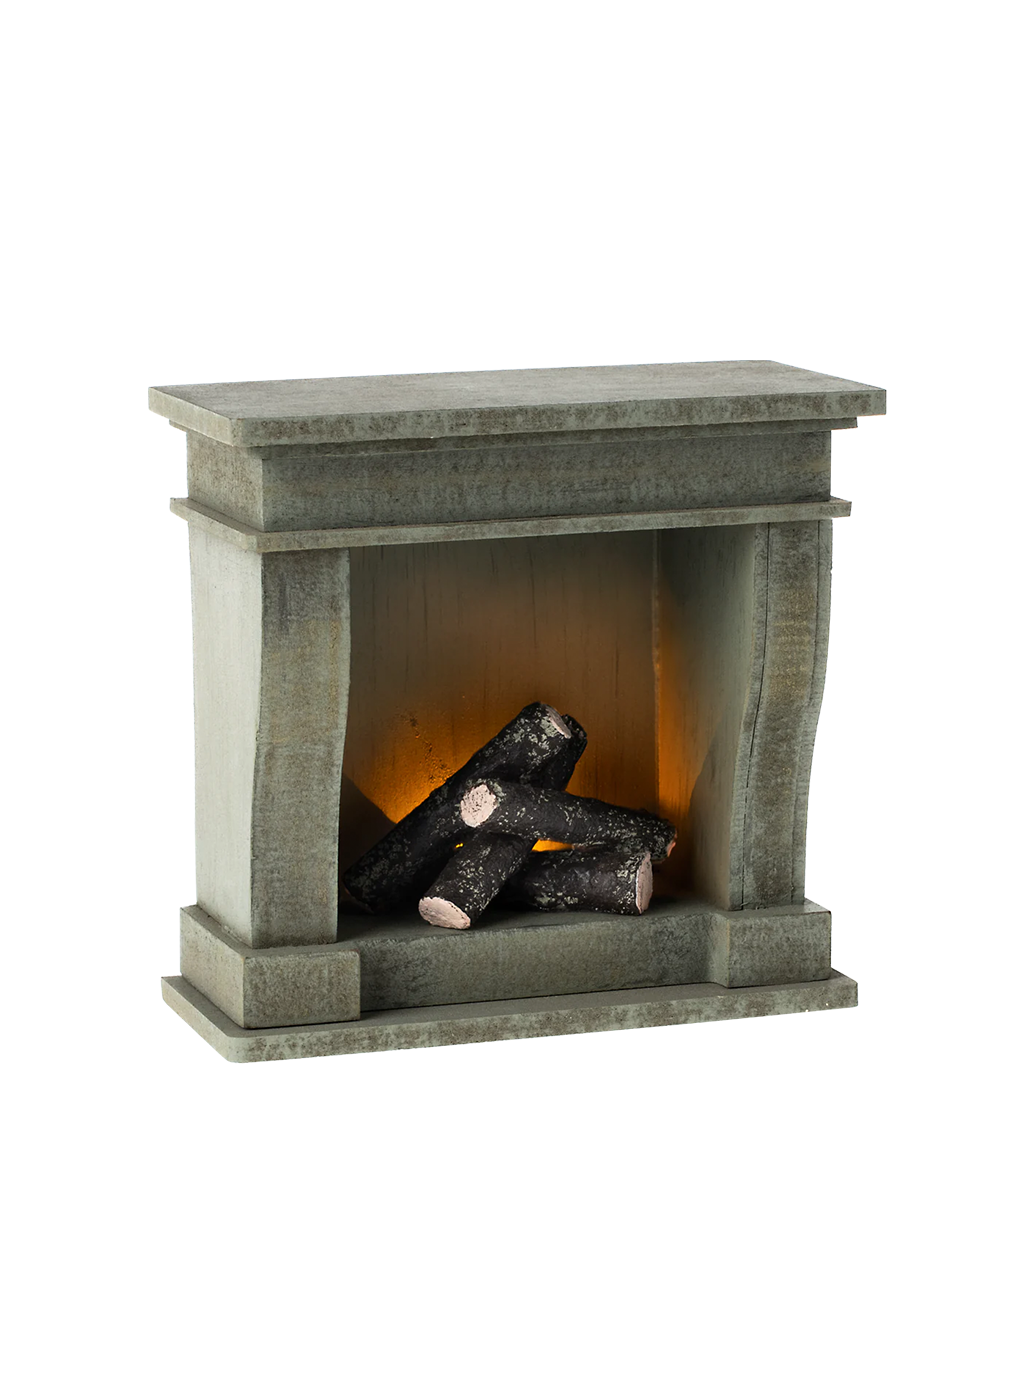 Miniaturę fireplace